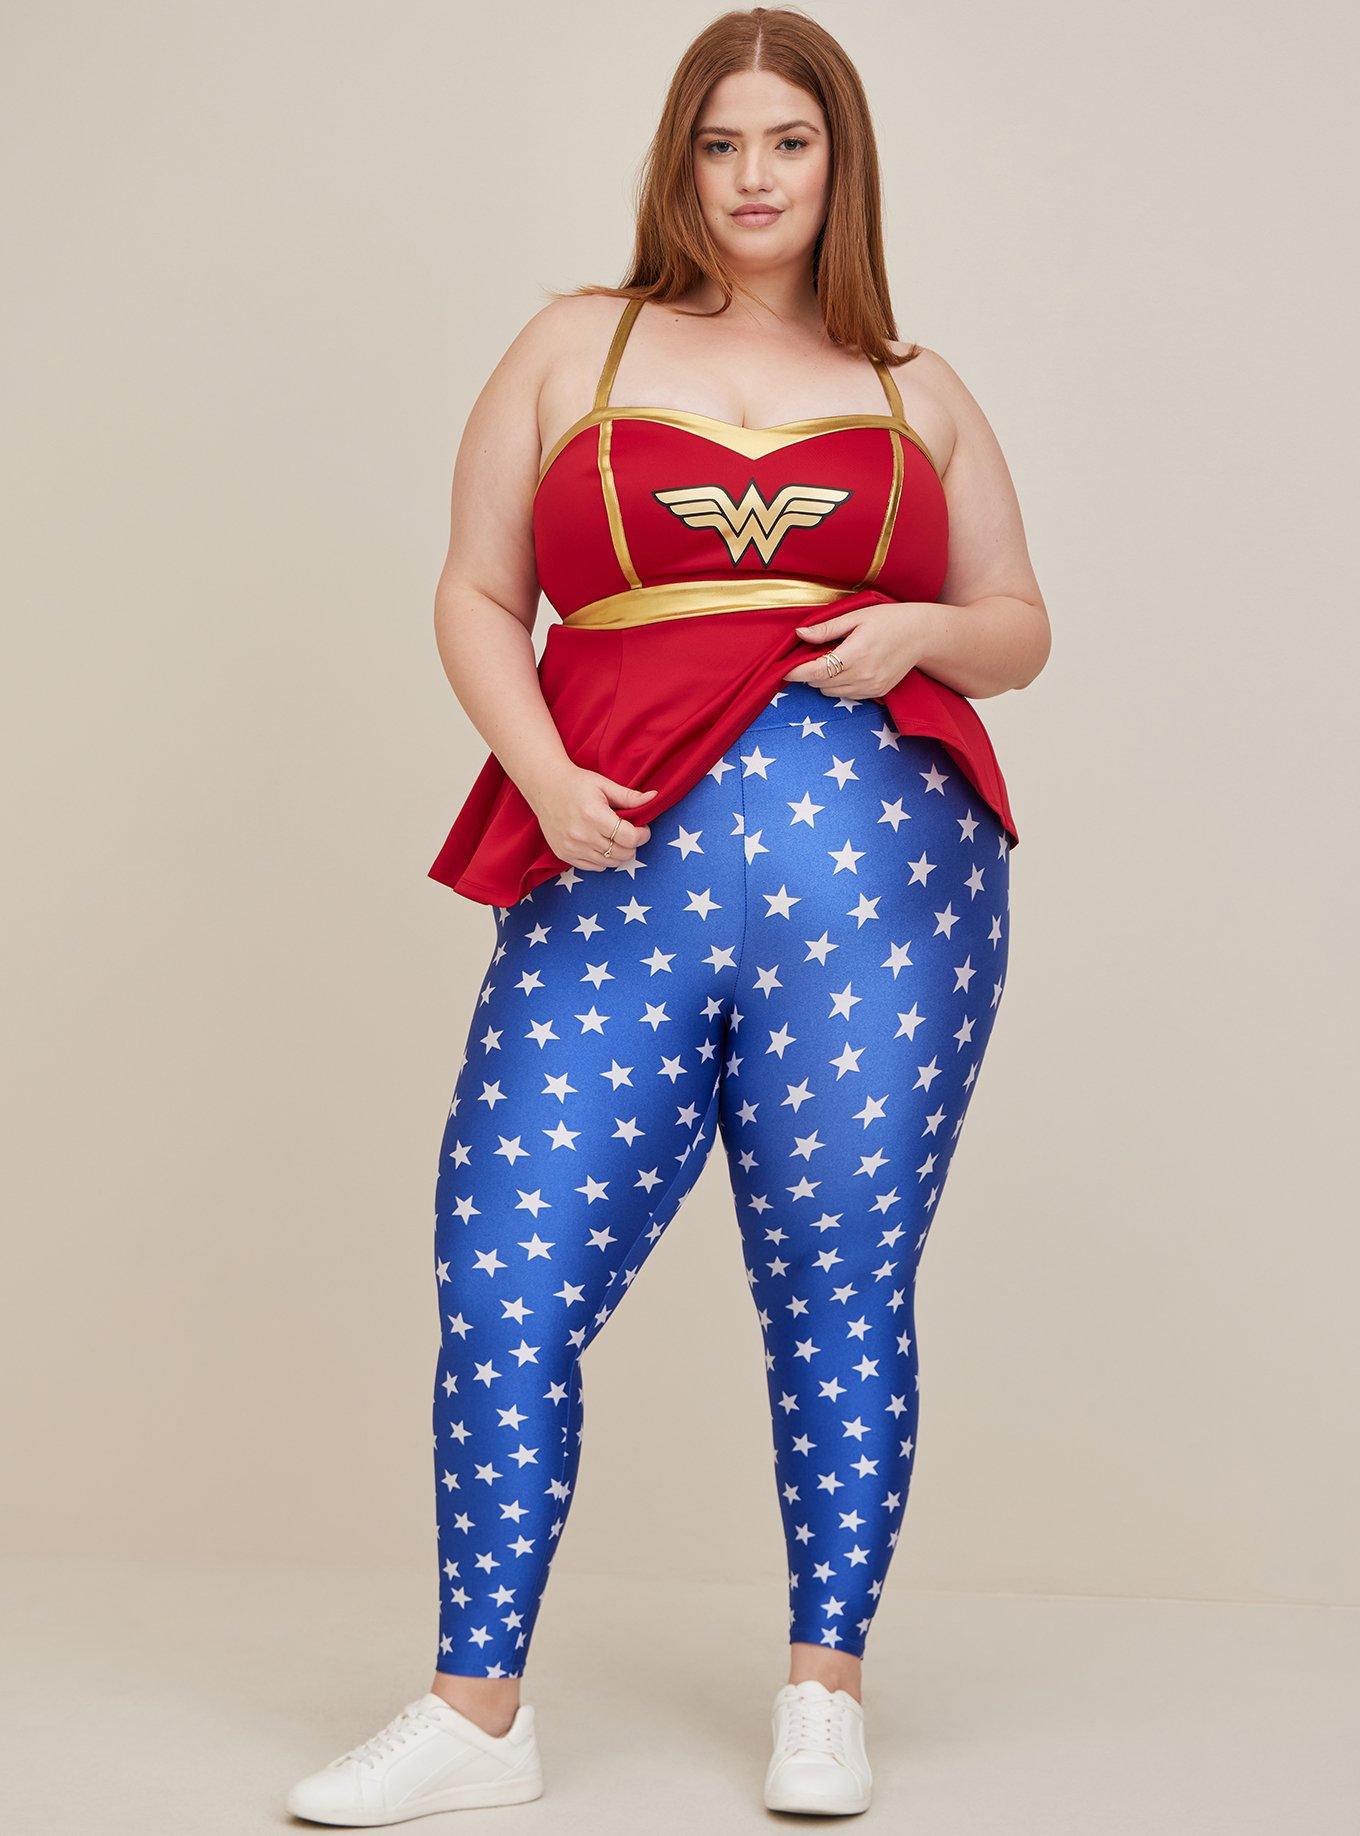 Plus Size - Triangle Bikini Top - DC Comics Wonder Woman - Torrid